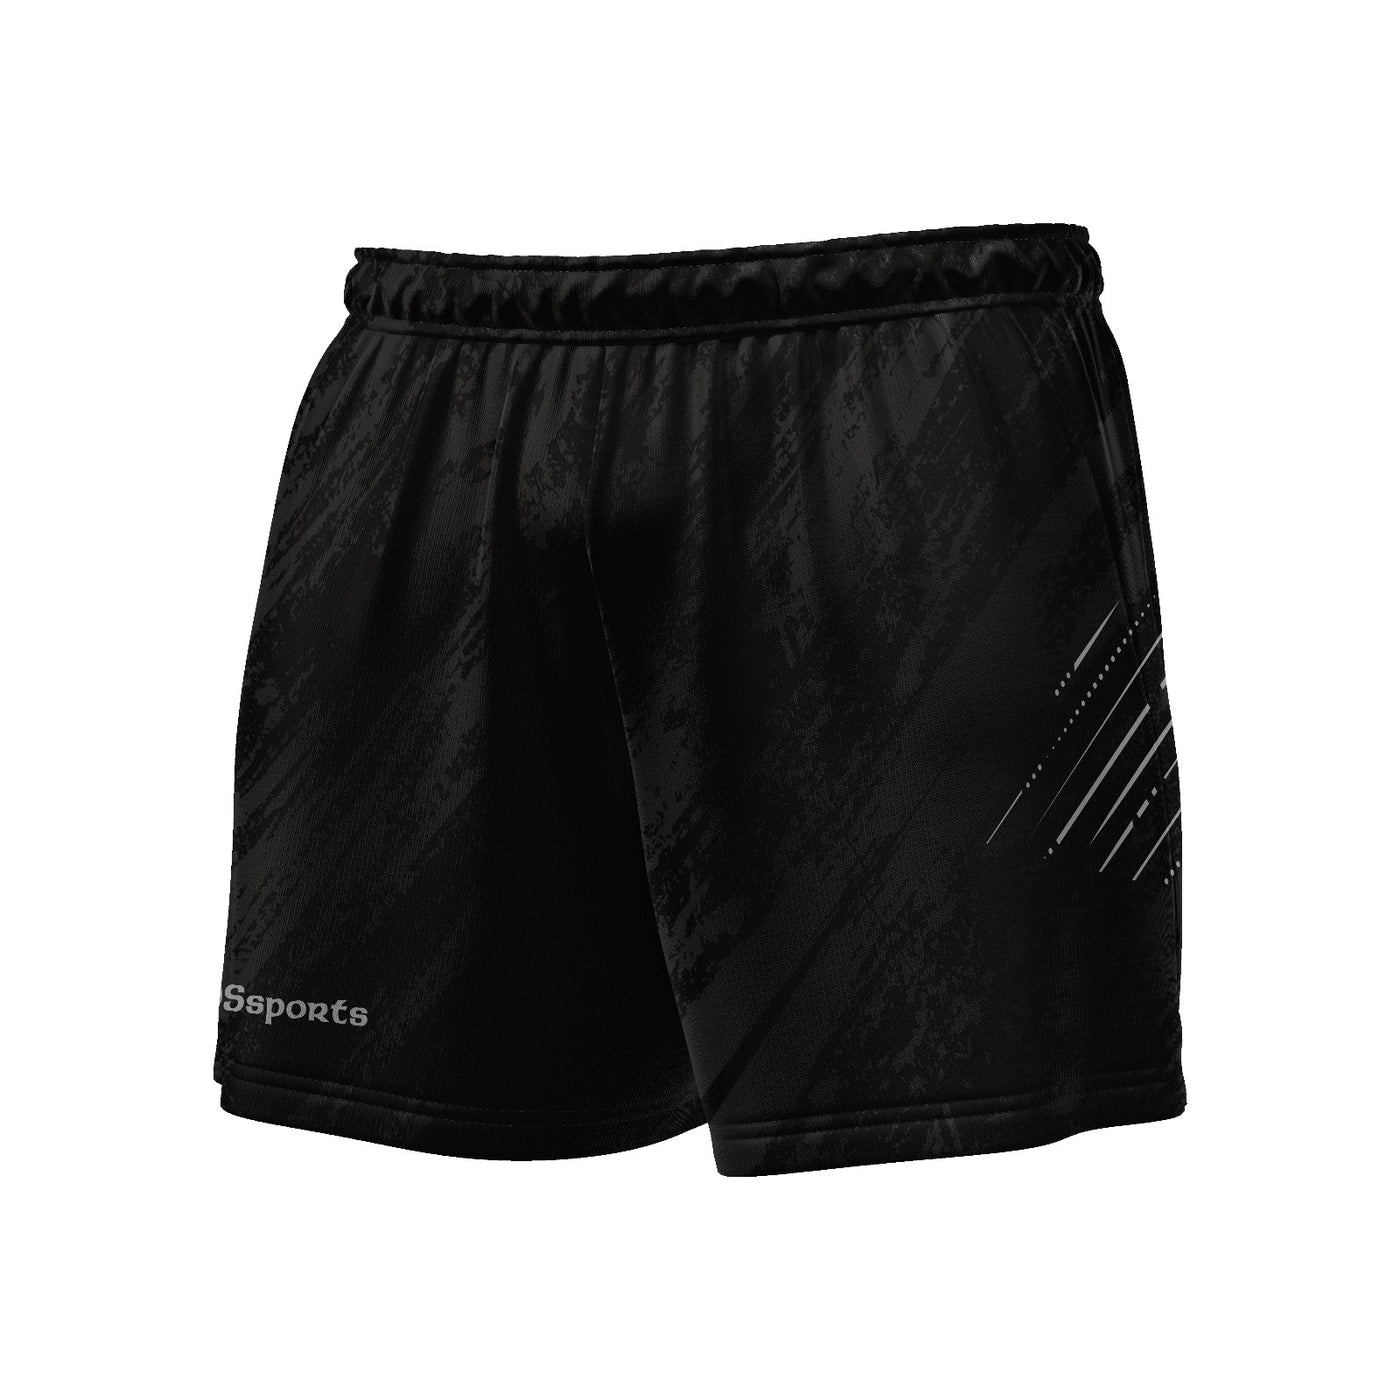 Surge Shorts - Black/ Charcoal